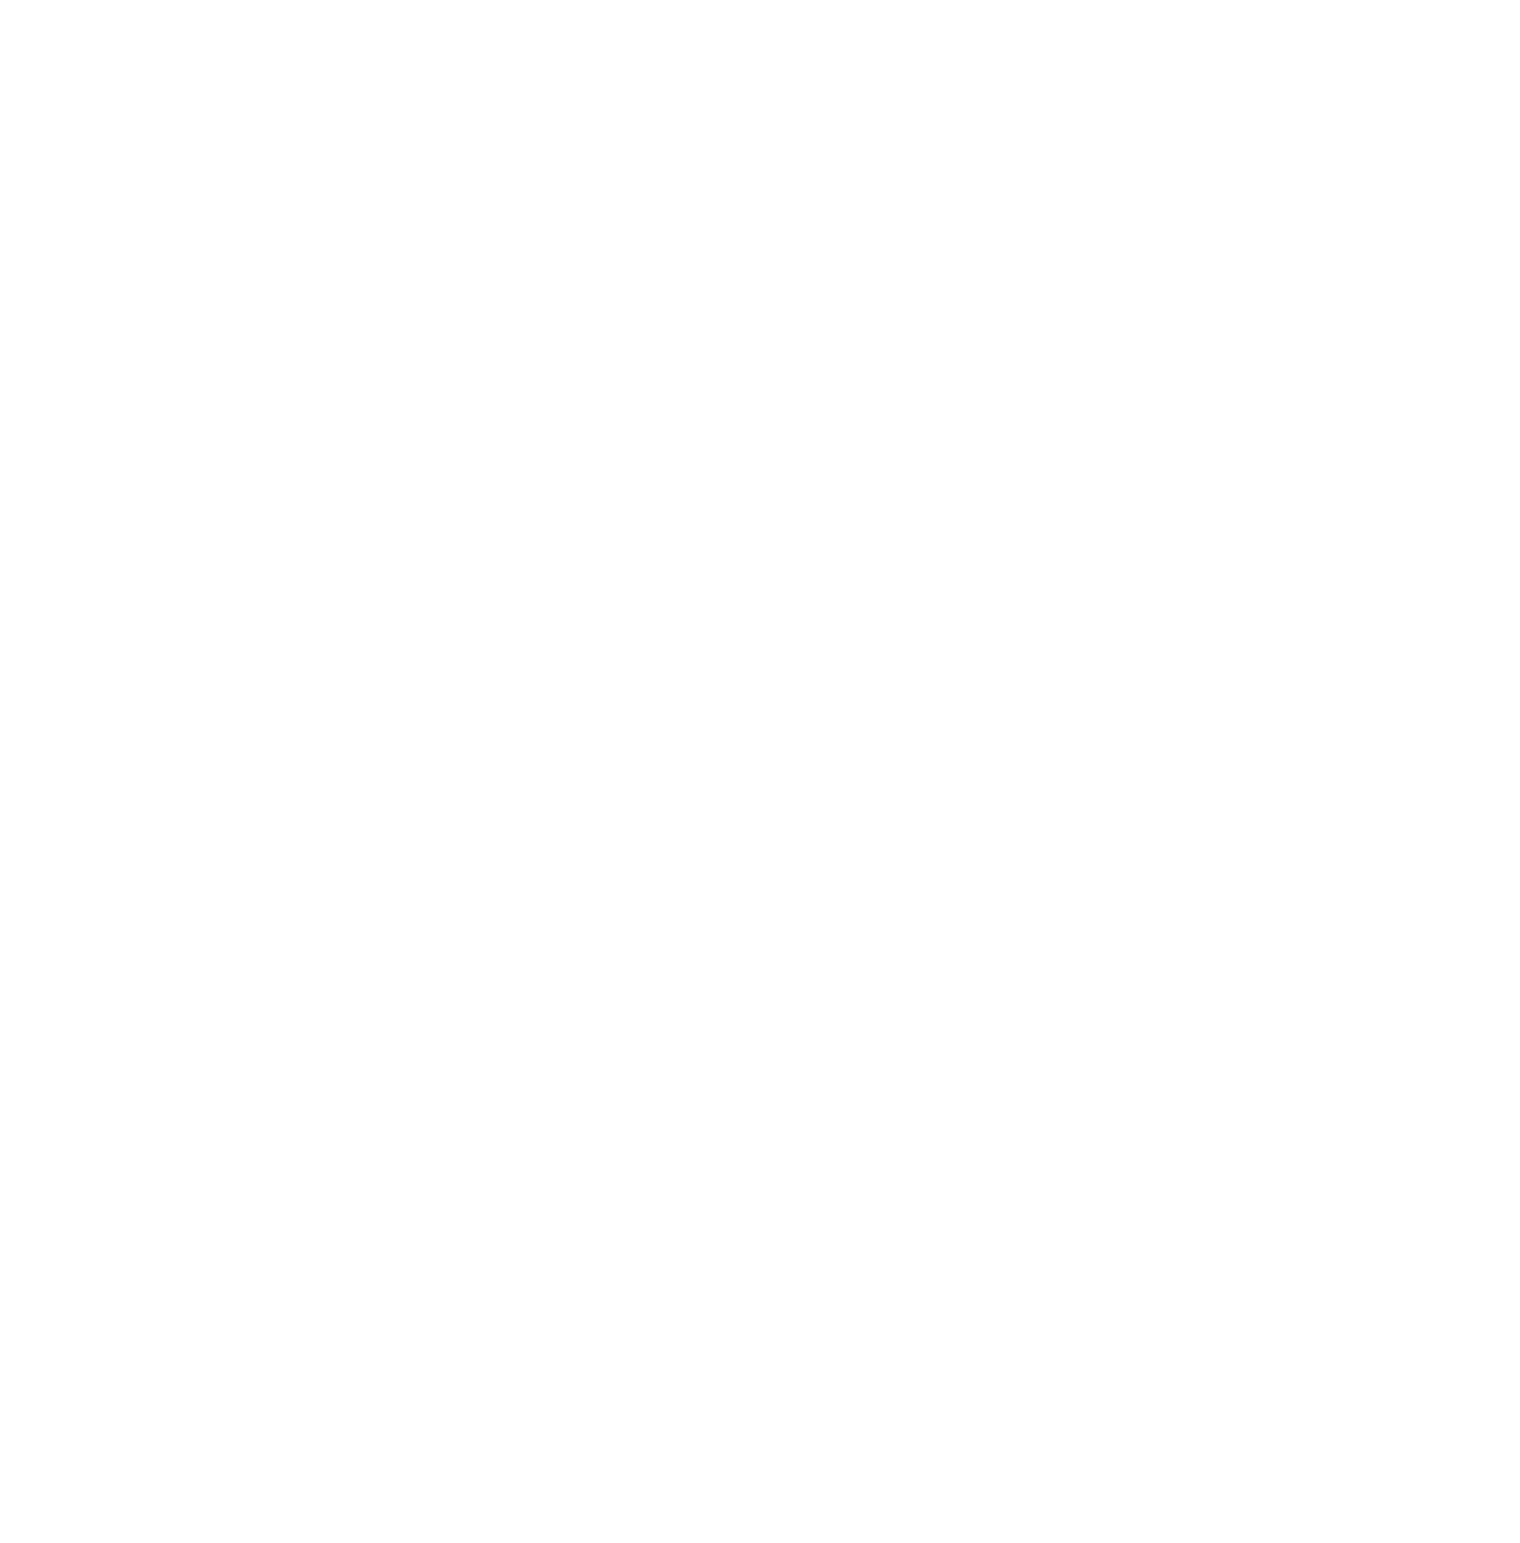 Washington Trust Bancorp logo for dark backgrounds (transparent PNG)